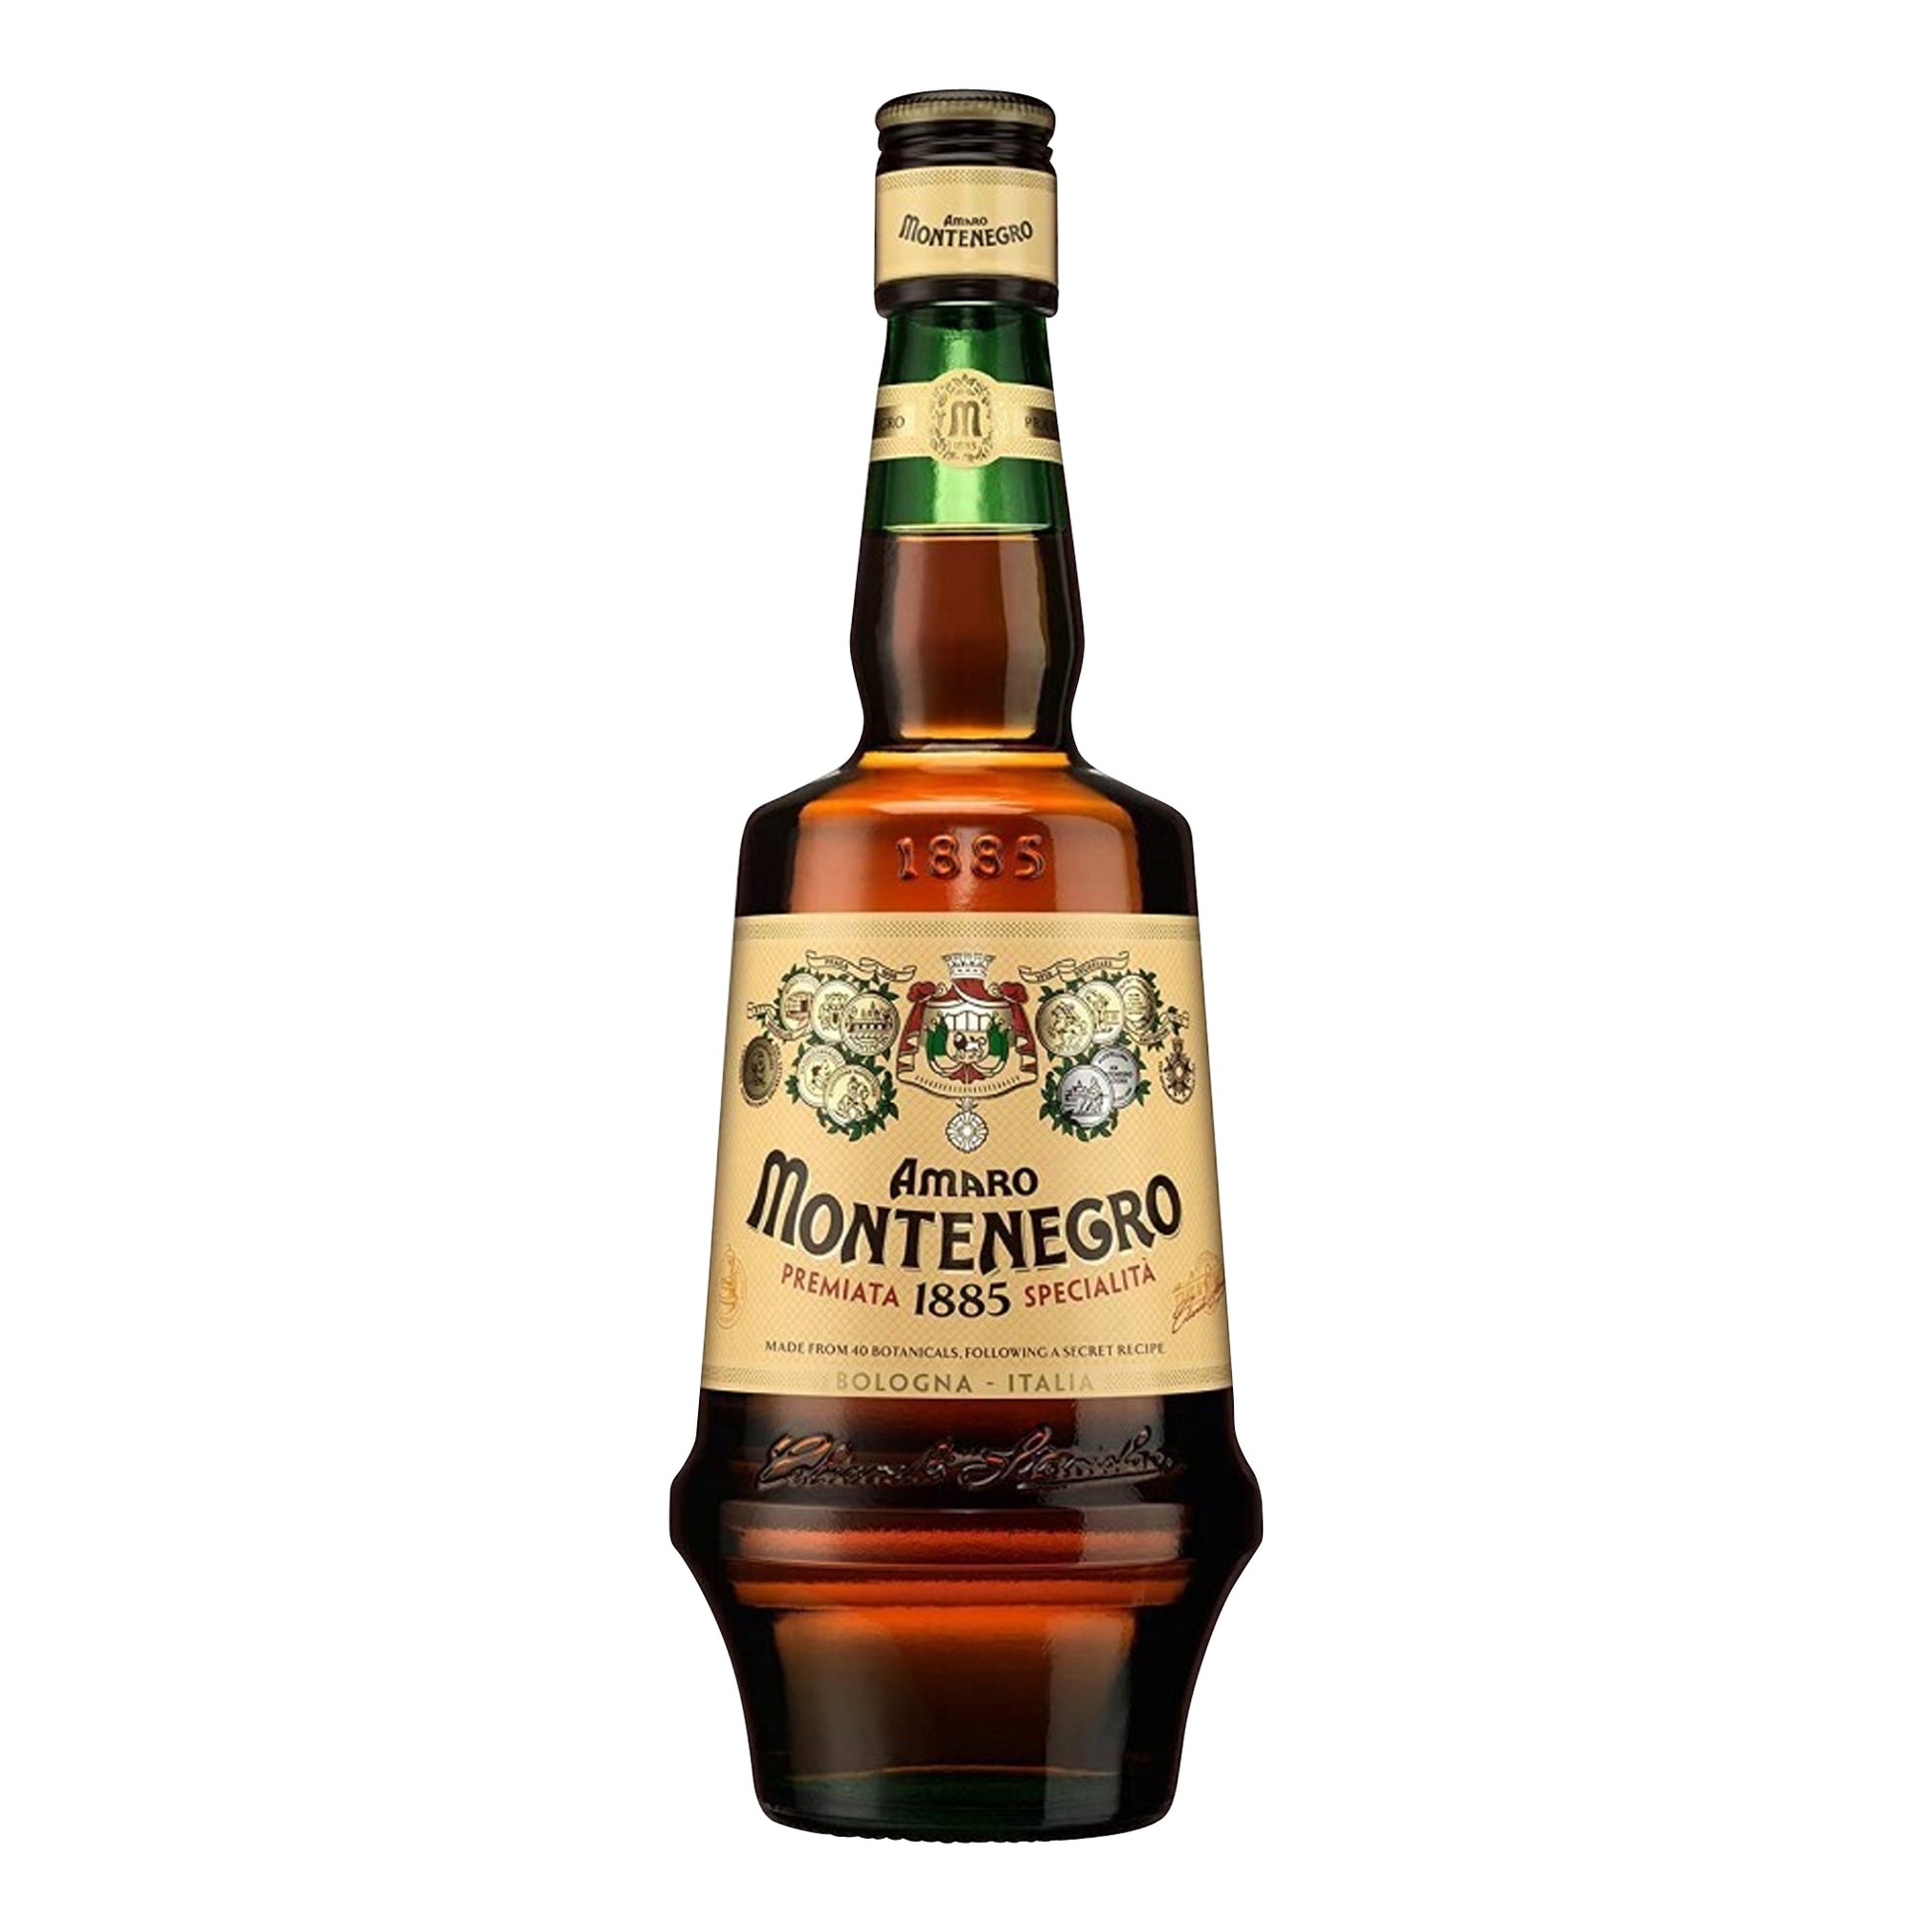 Amaro Montenegro 23.00% / 1000 / 6